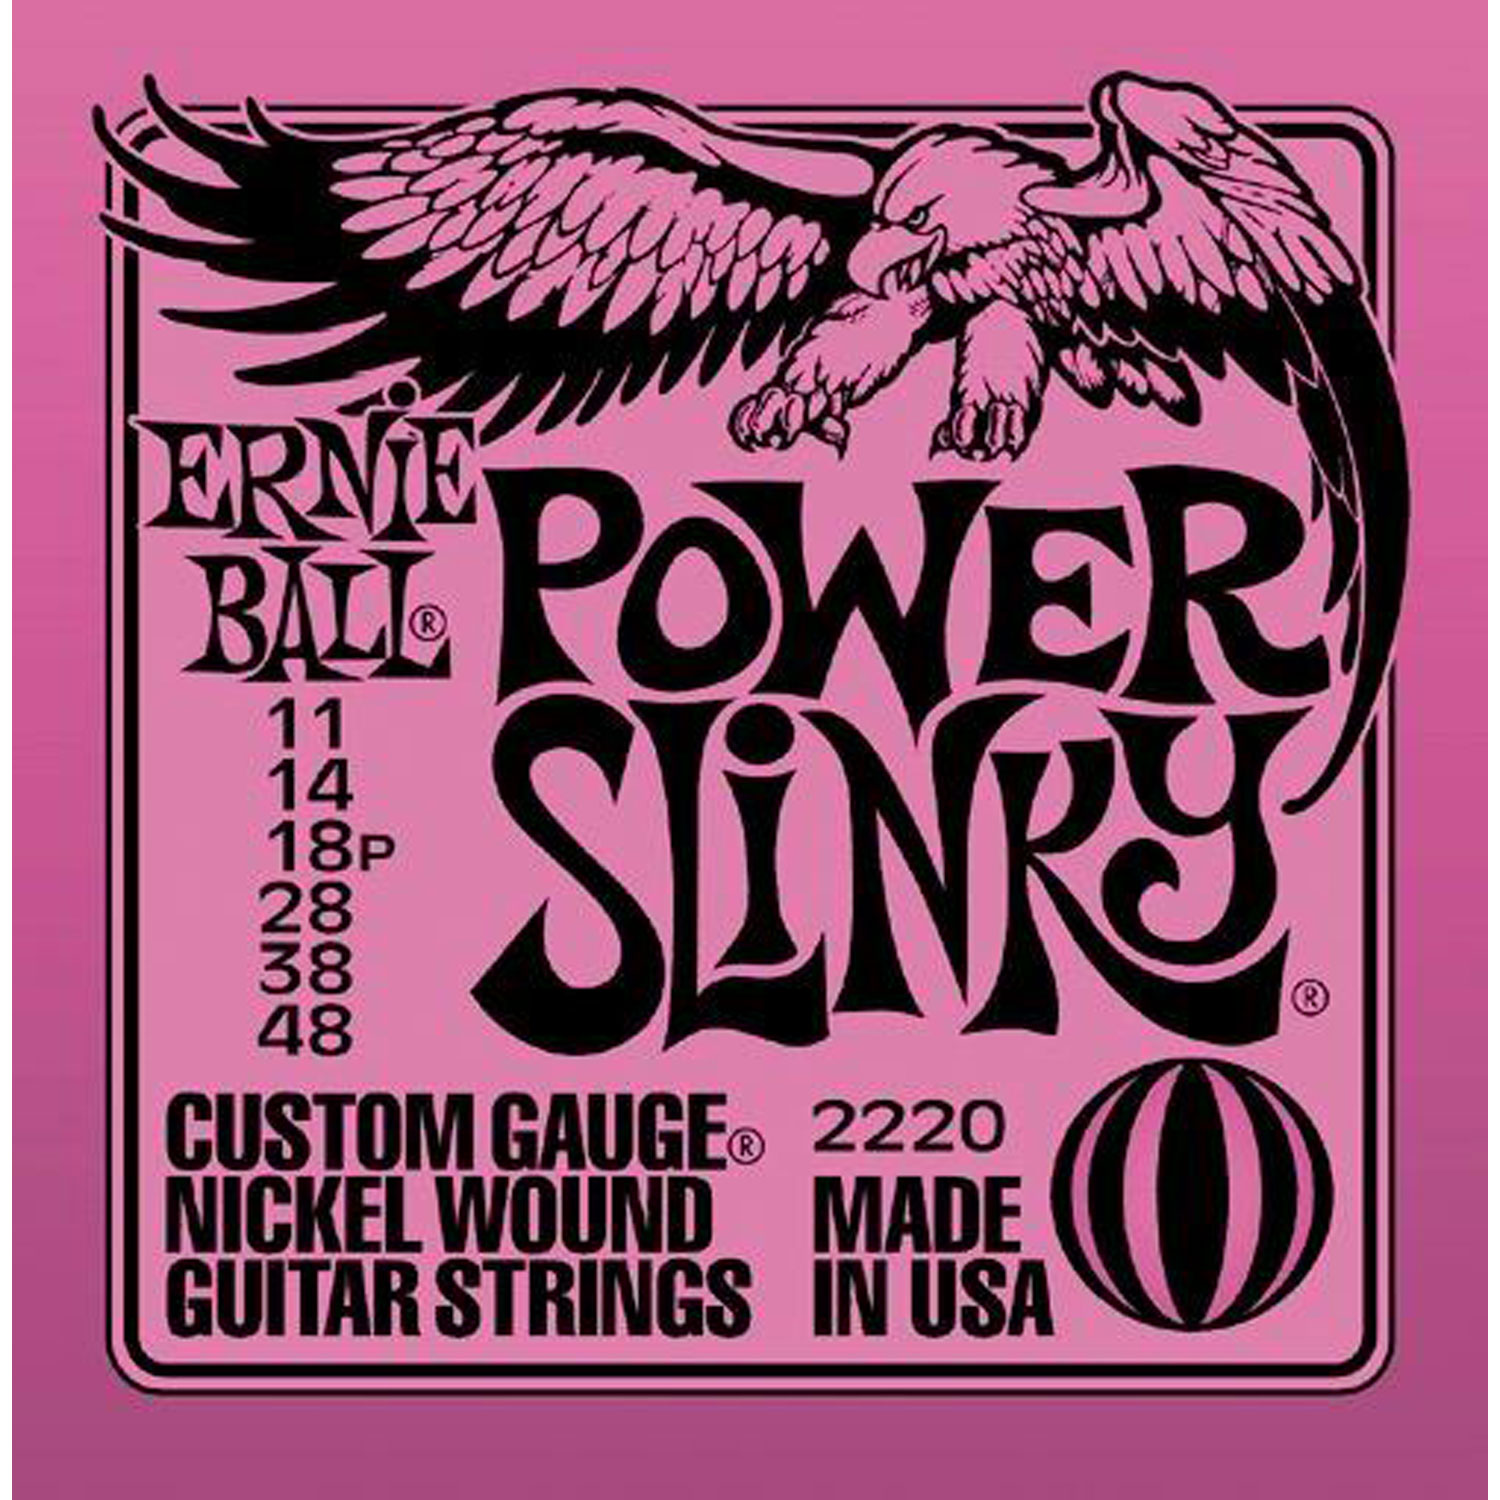 Ernie Ball 2220 струны для эл. гитары Power Slinky purple (11-14-18p-28-38-48) Nickel Wound